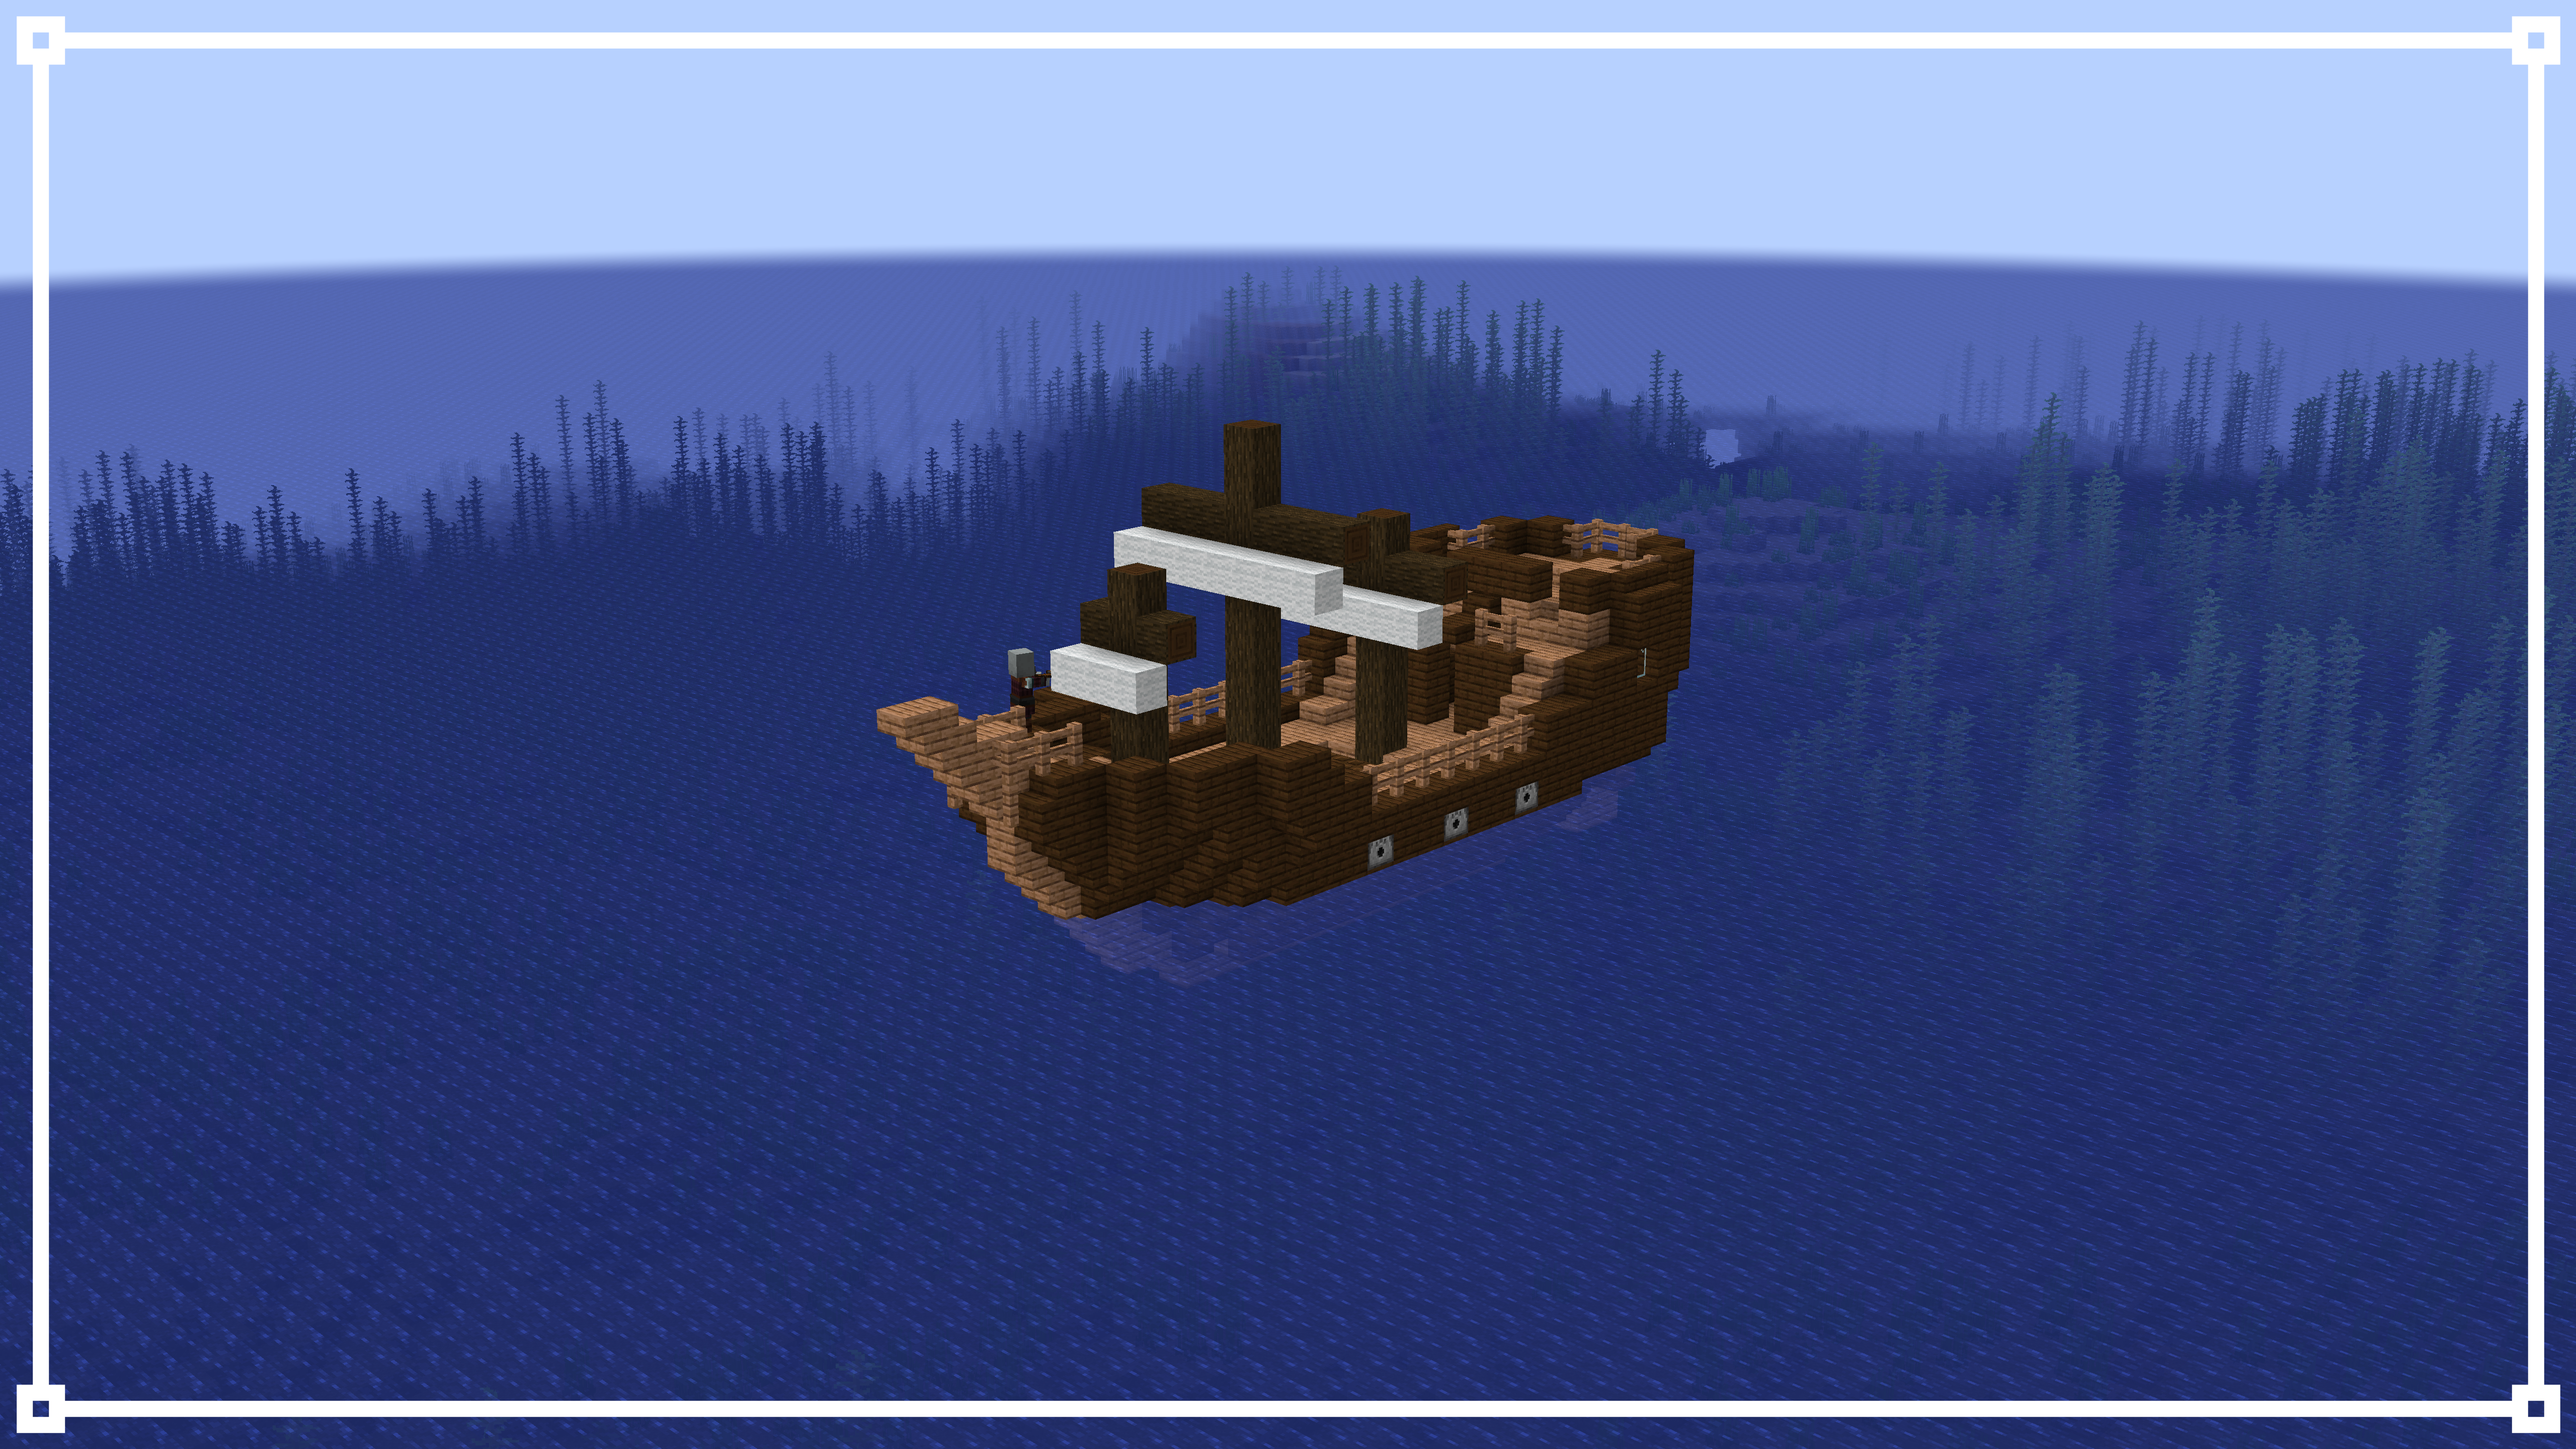 A pirate ship in the open sea.